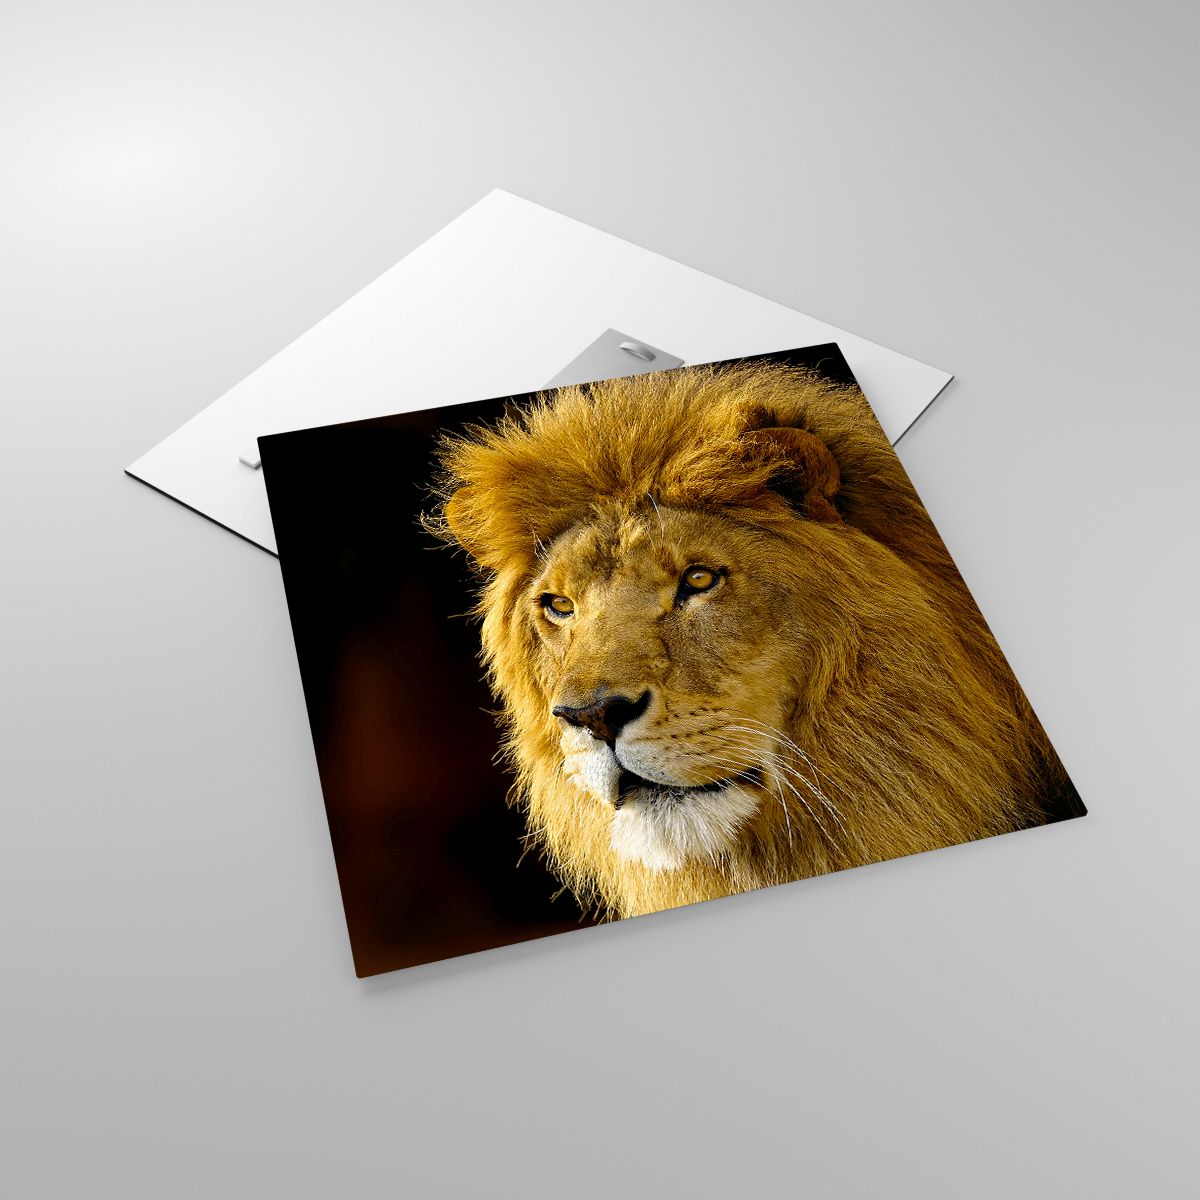 Glasbild  Tiere, Glasbild Löwe, Glasbild Natur, Glasbild Raubtier, Glasbild Afrika